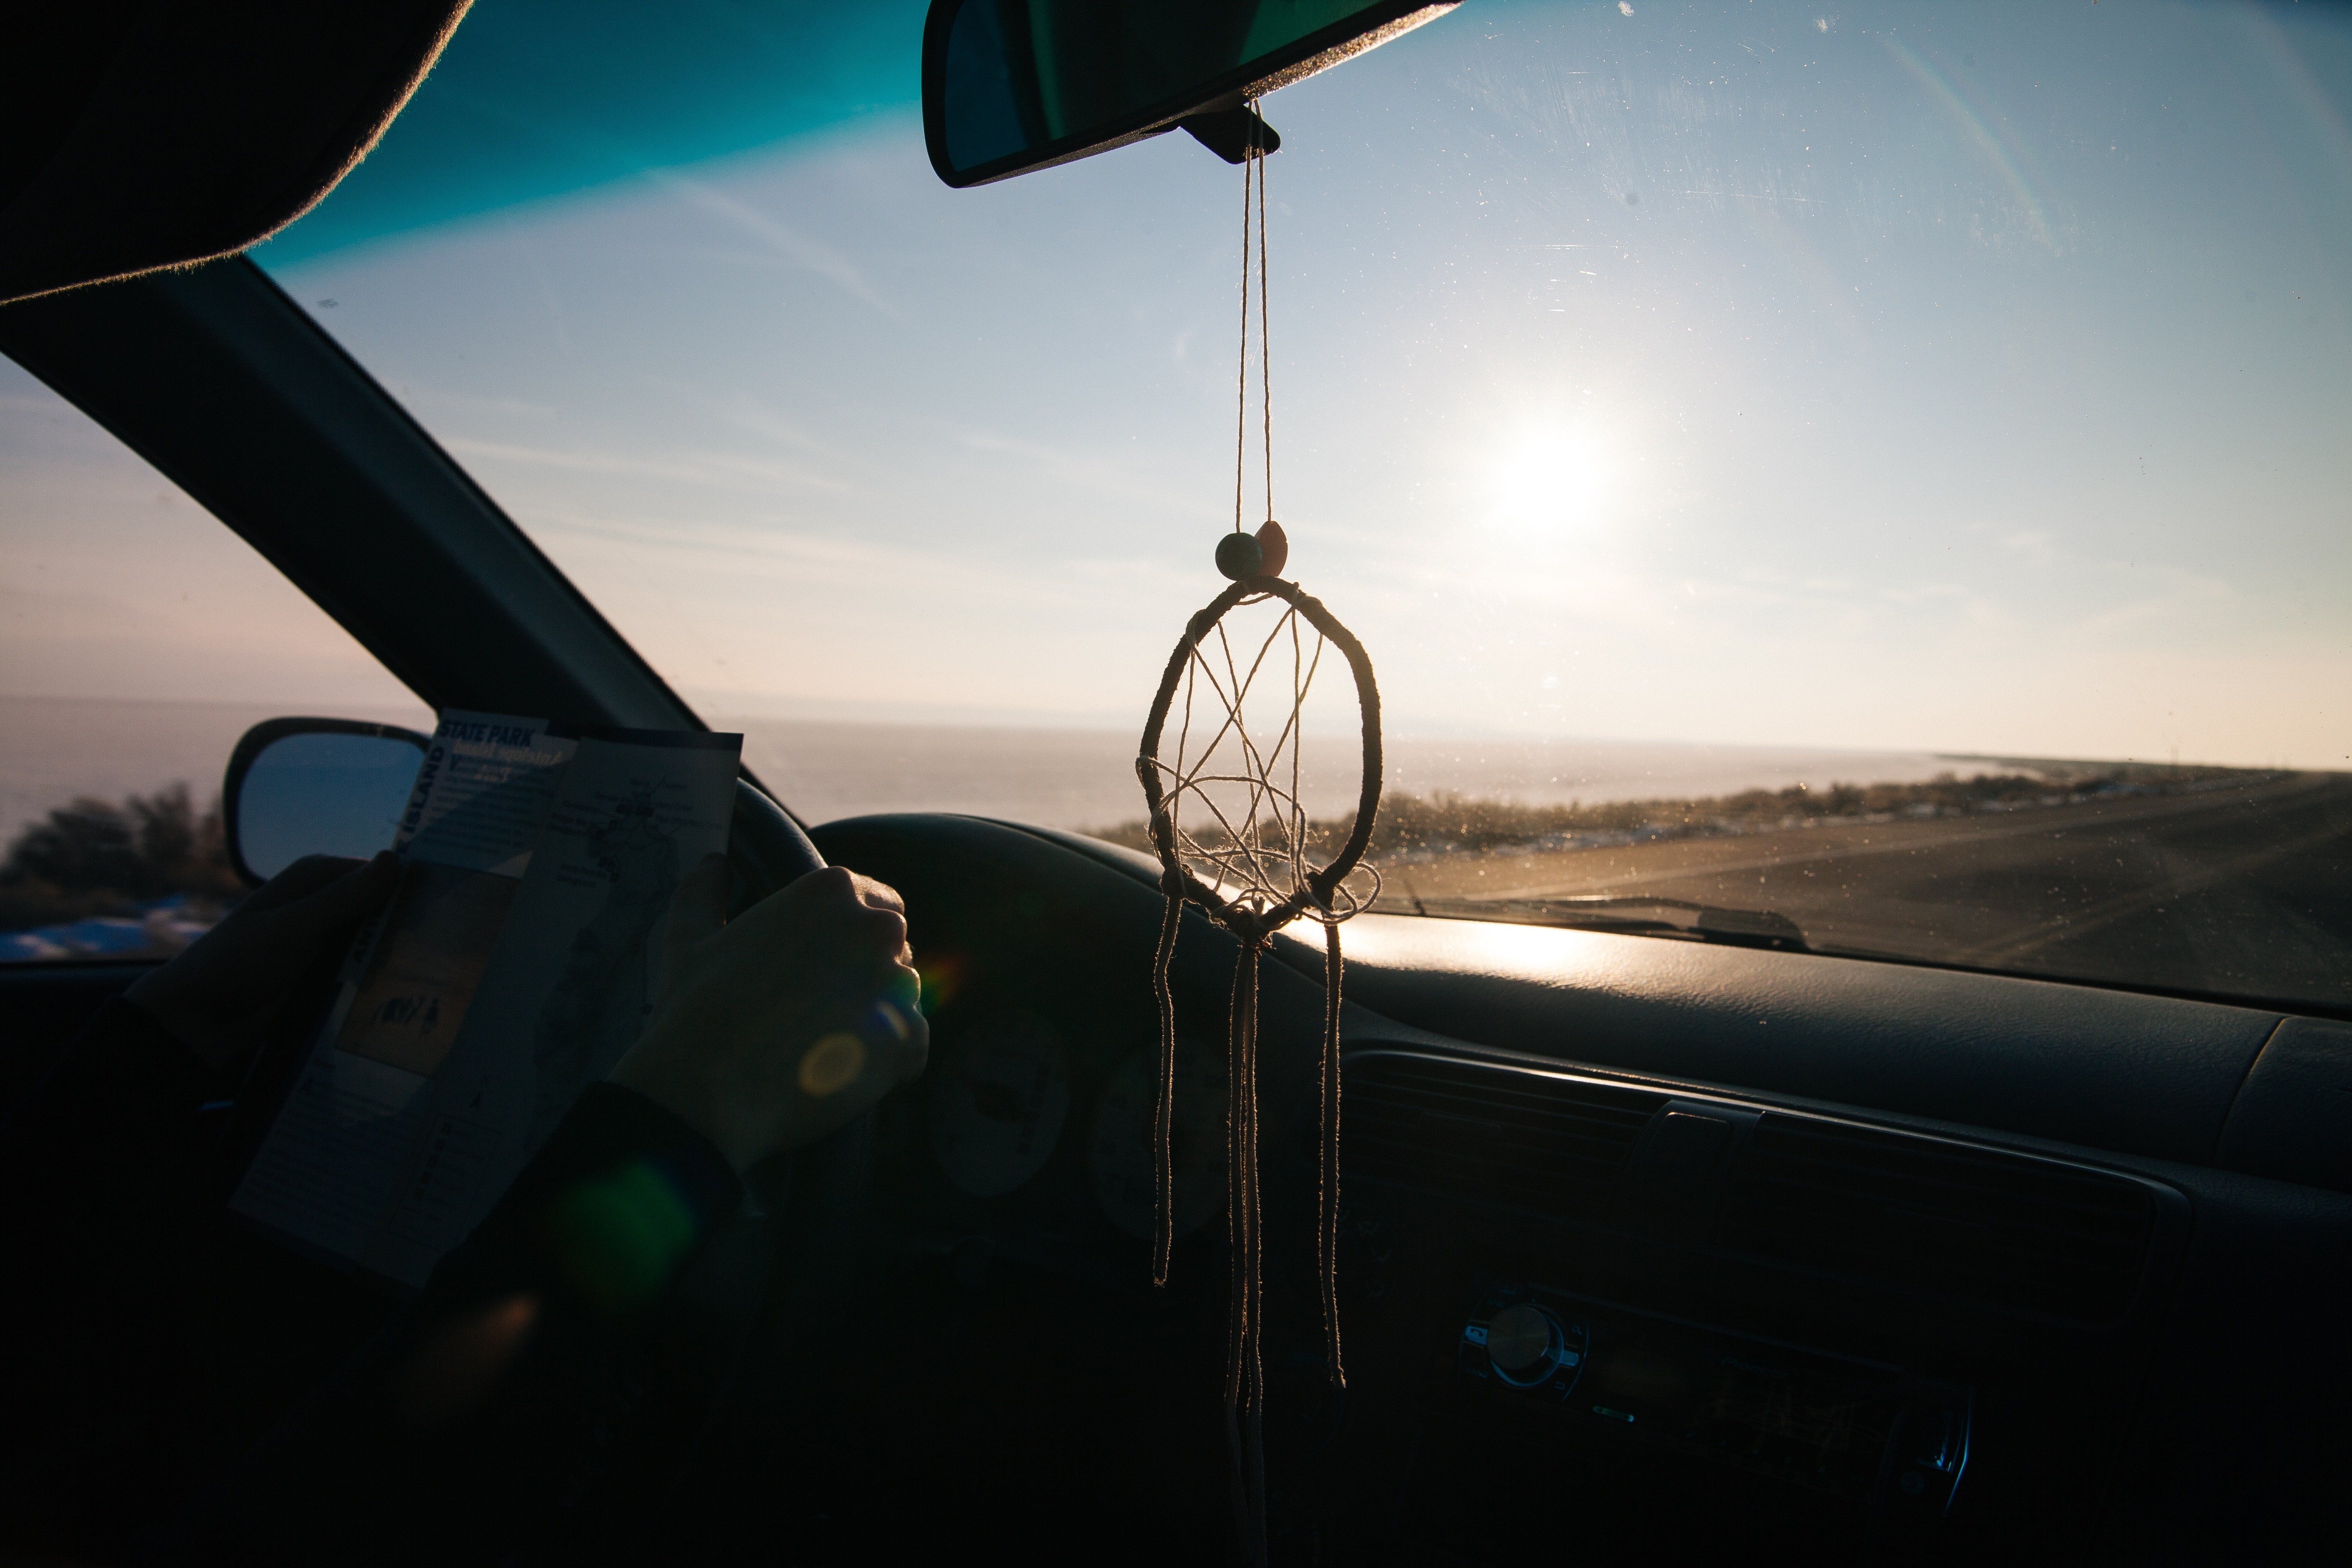 black dream catcher hanged on car rear view mirror during daytime